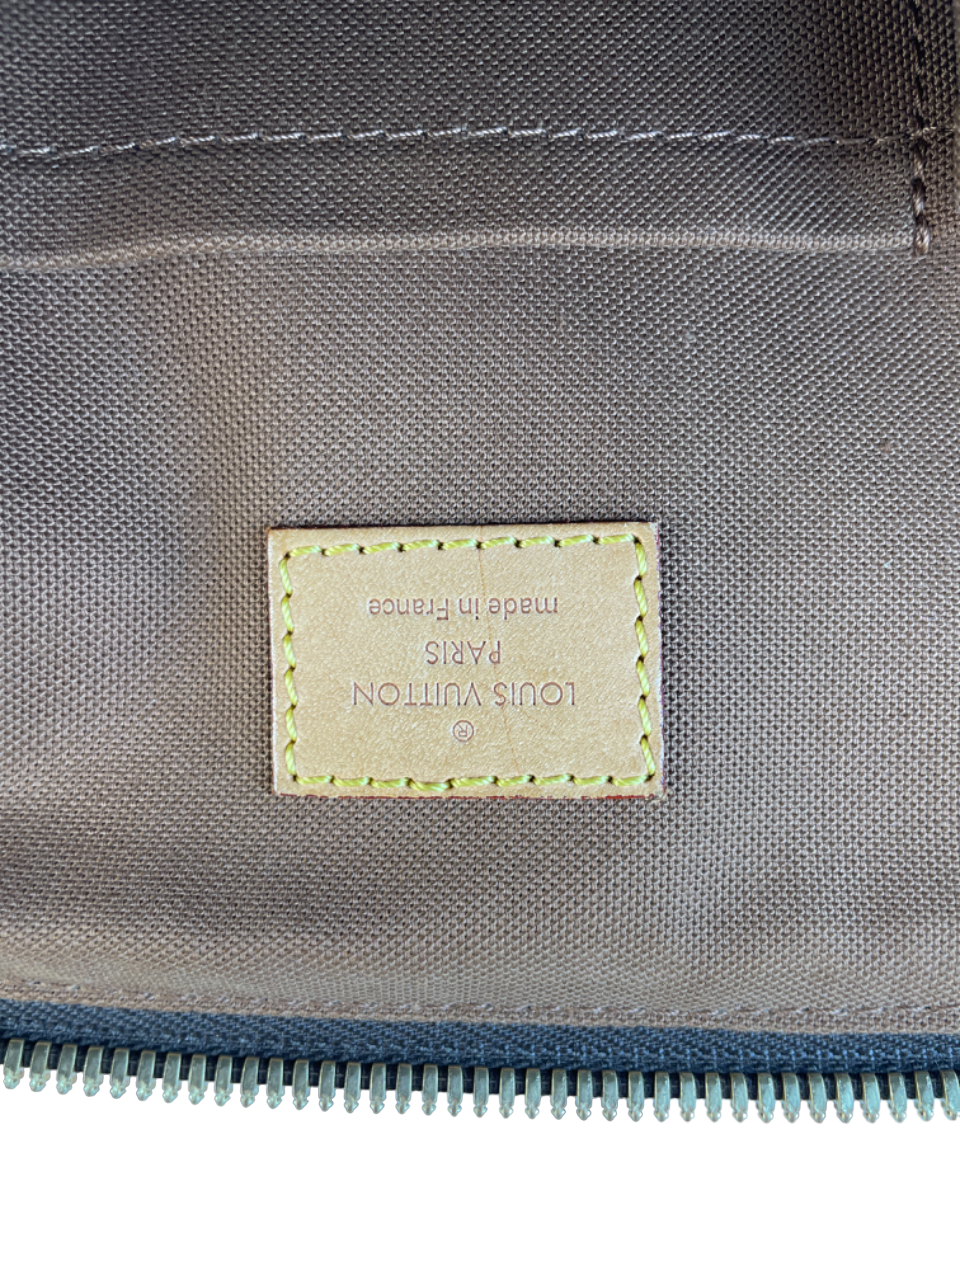 Preloved Louis Vuitton Monogram Canvas Tivoli GM Bag SP3018 092723